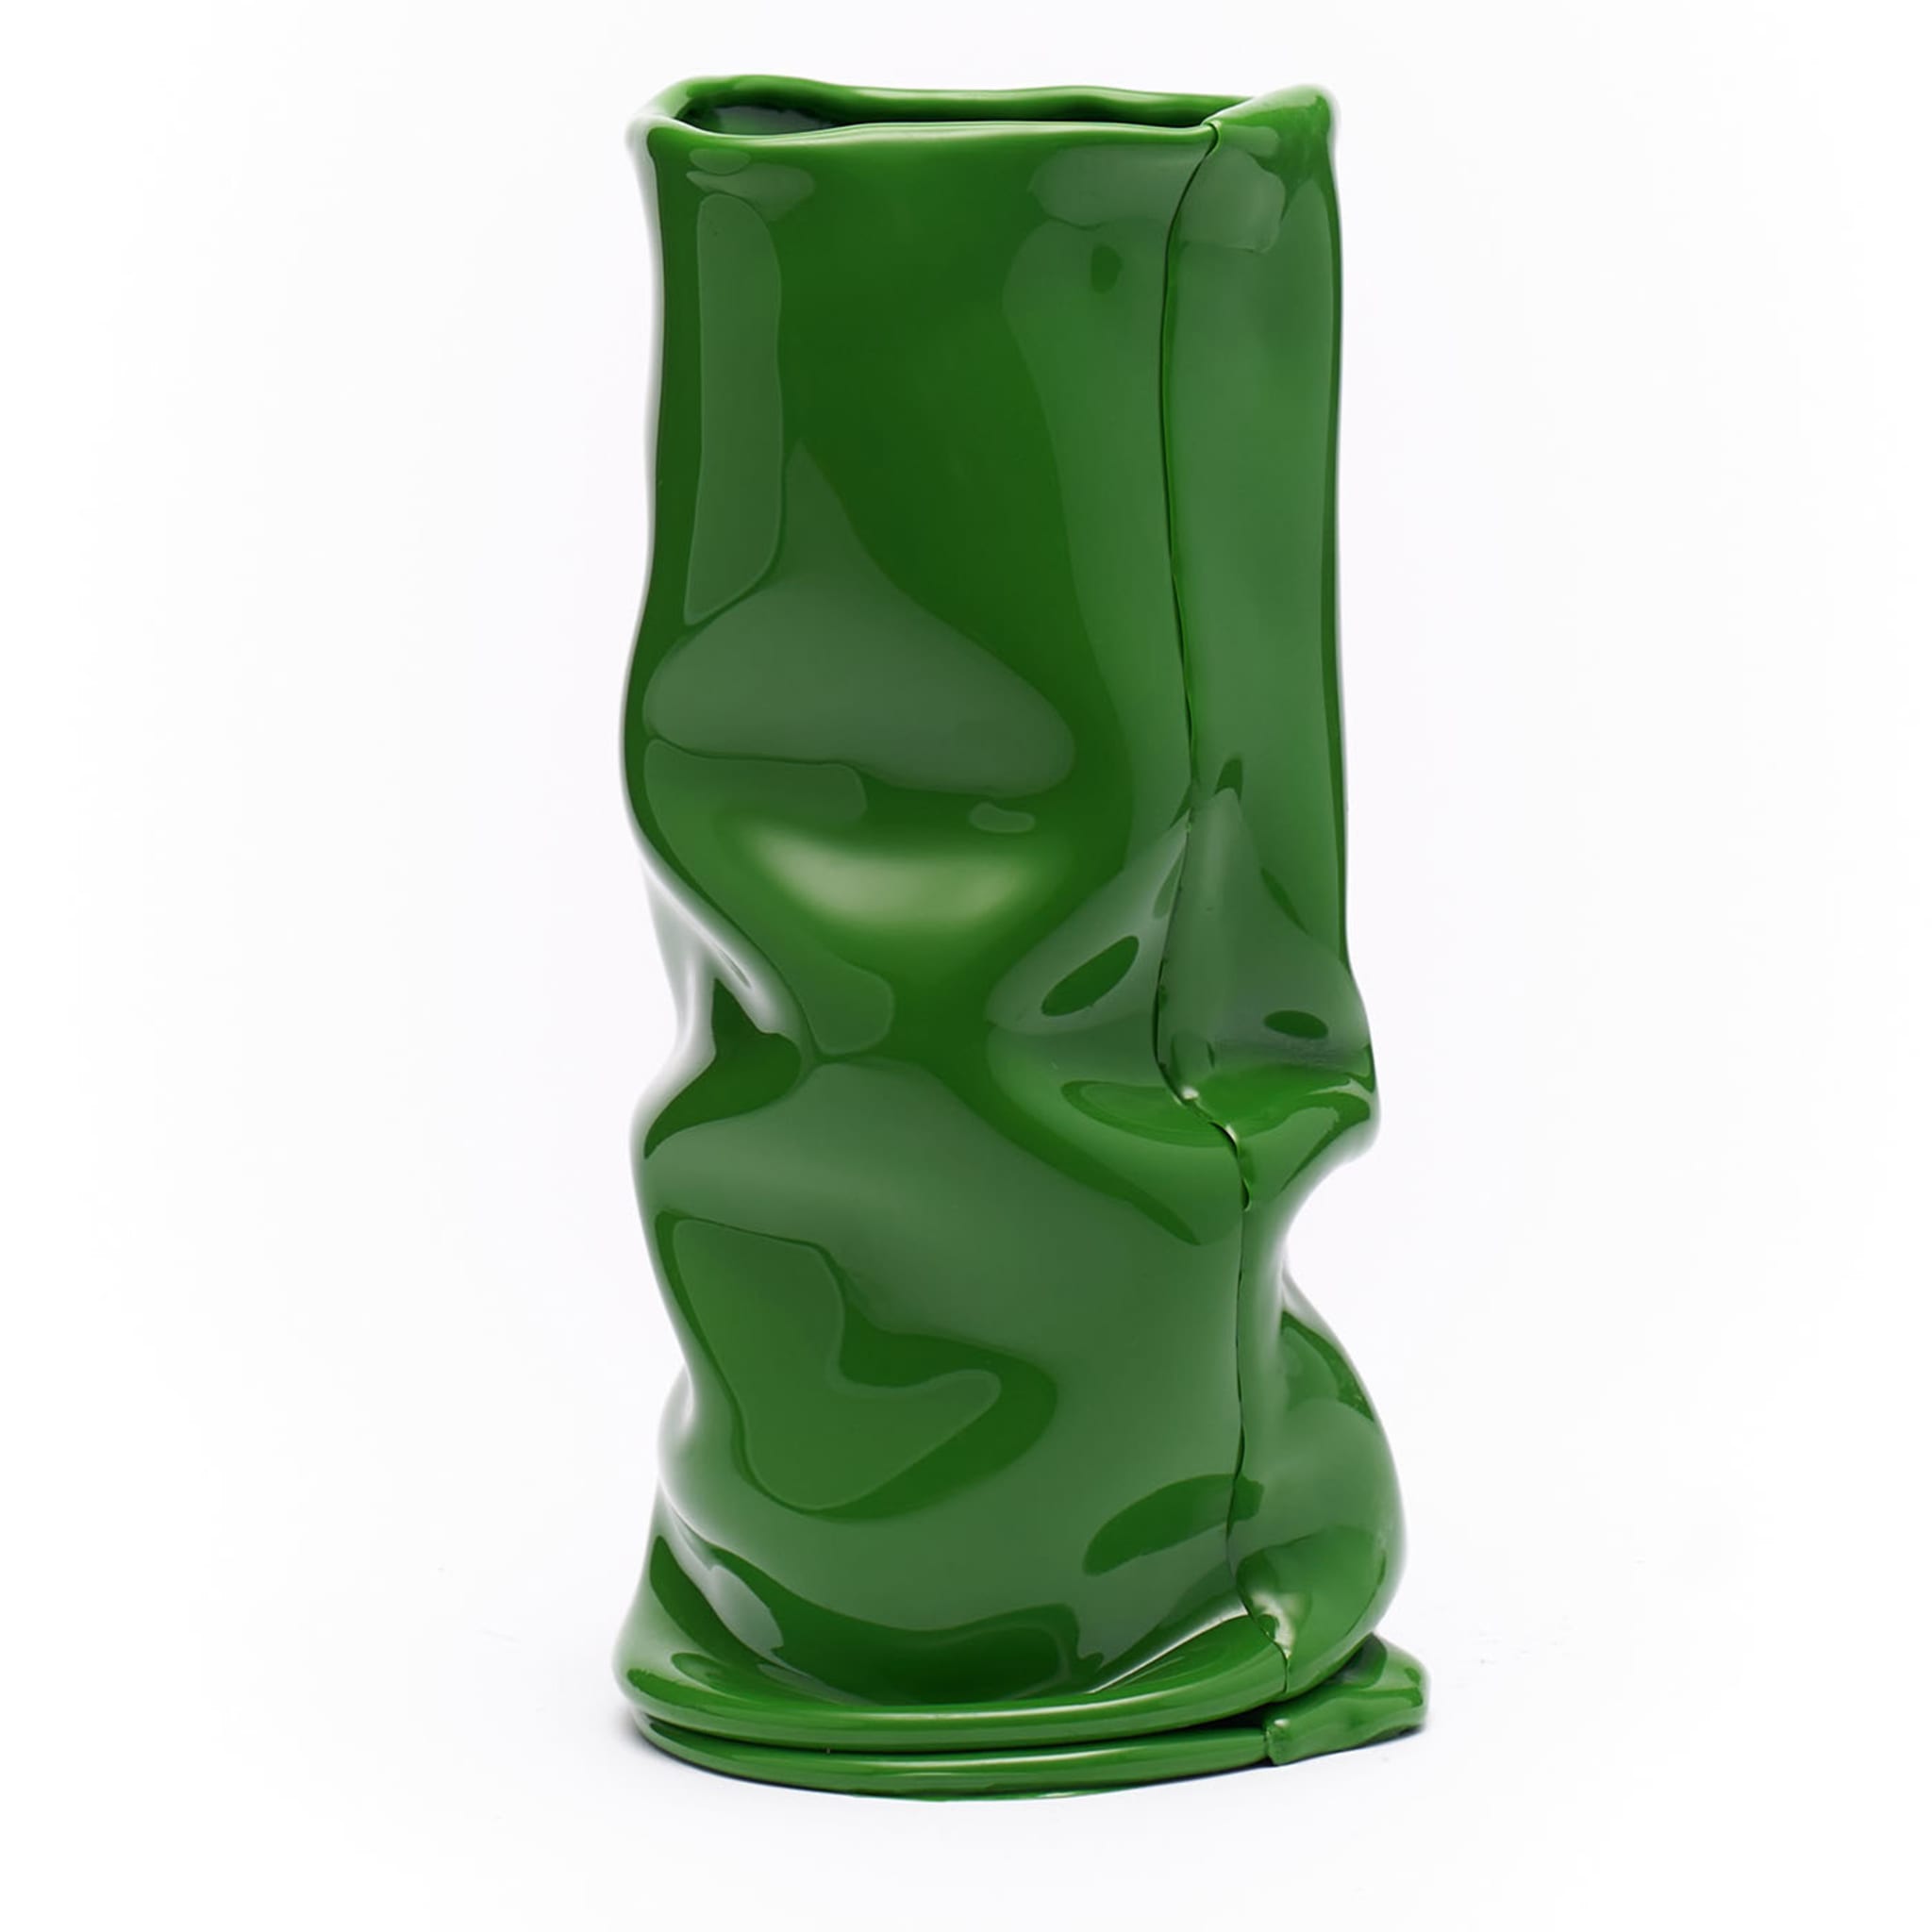 Venere Small Green Vase - Alternative view 1